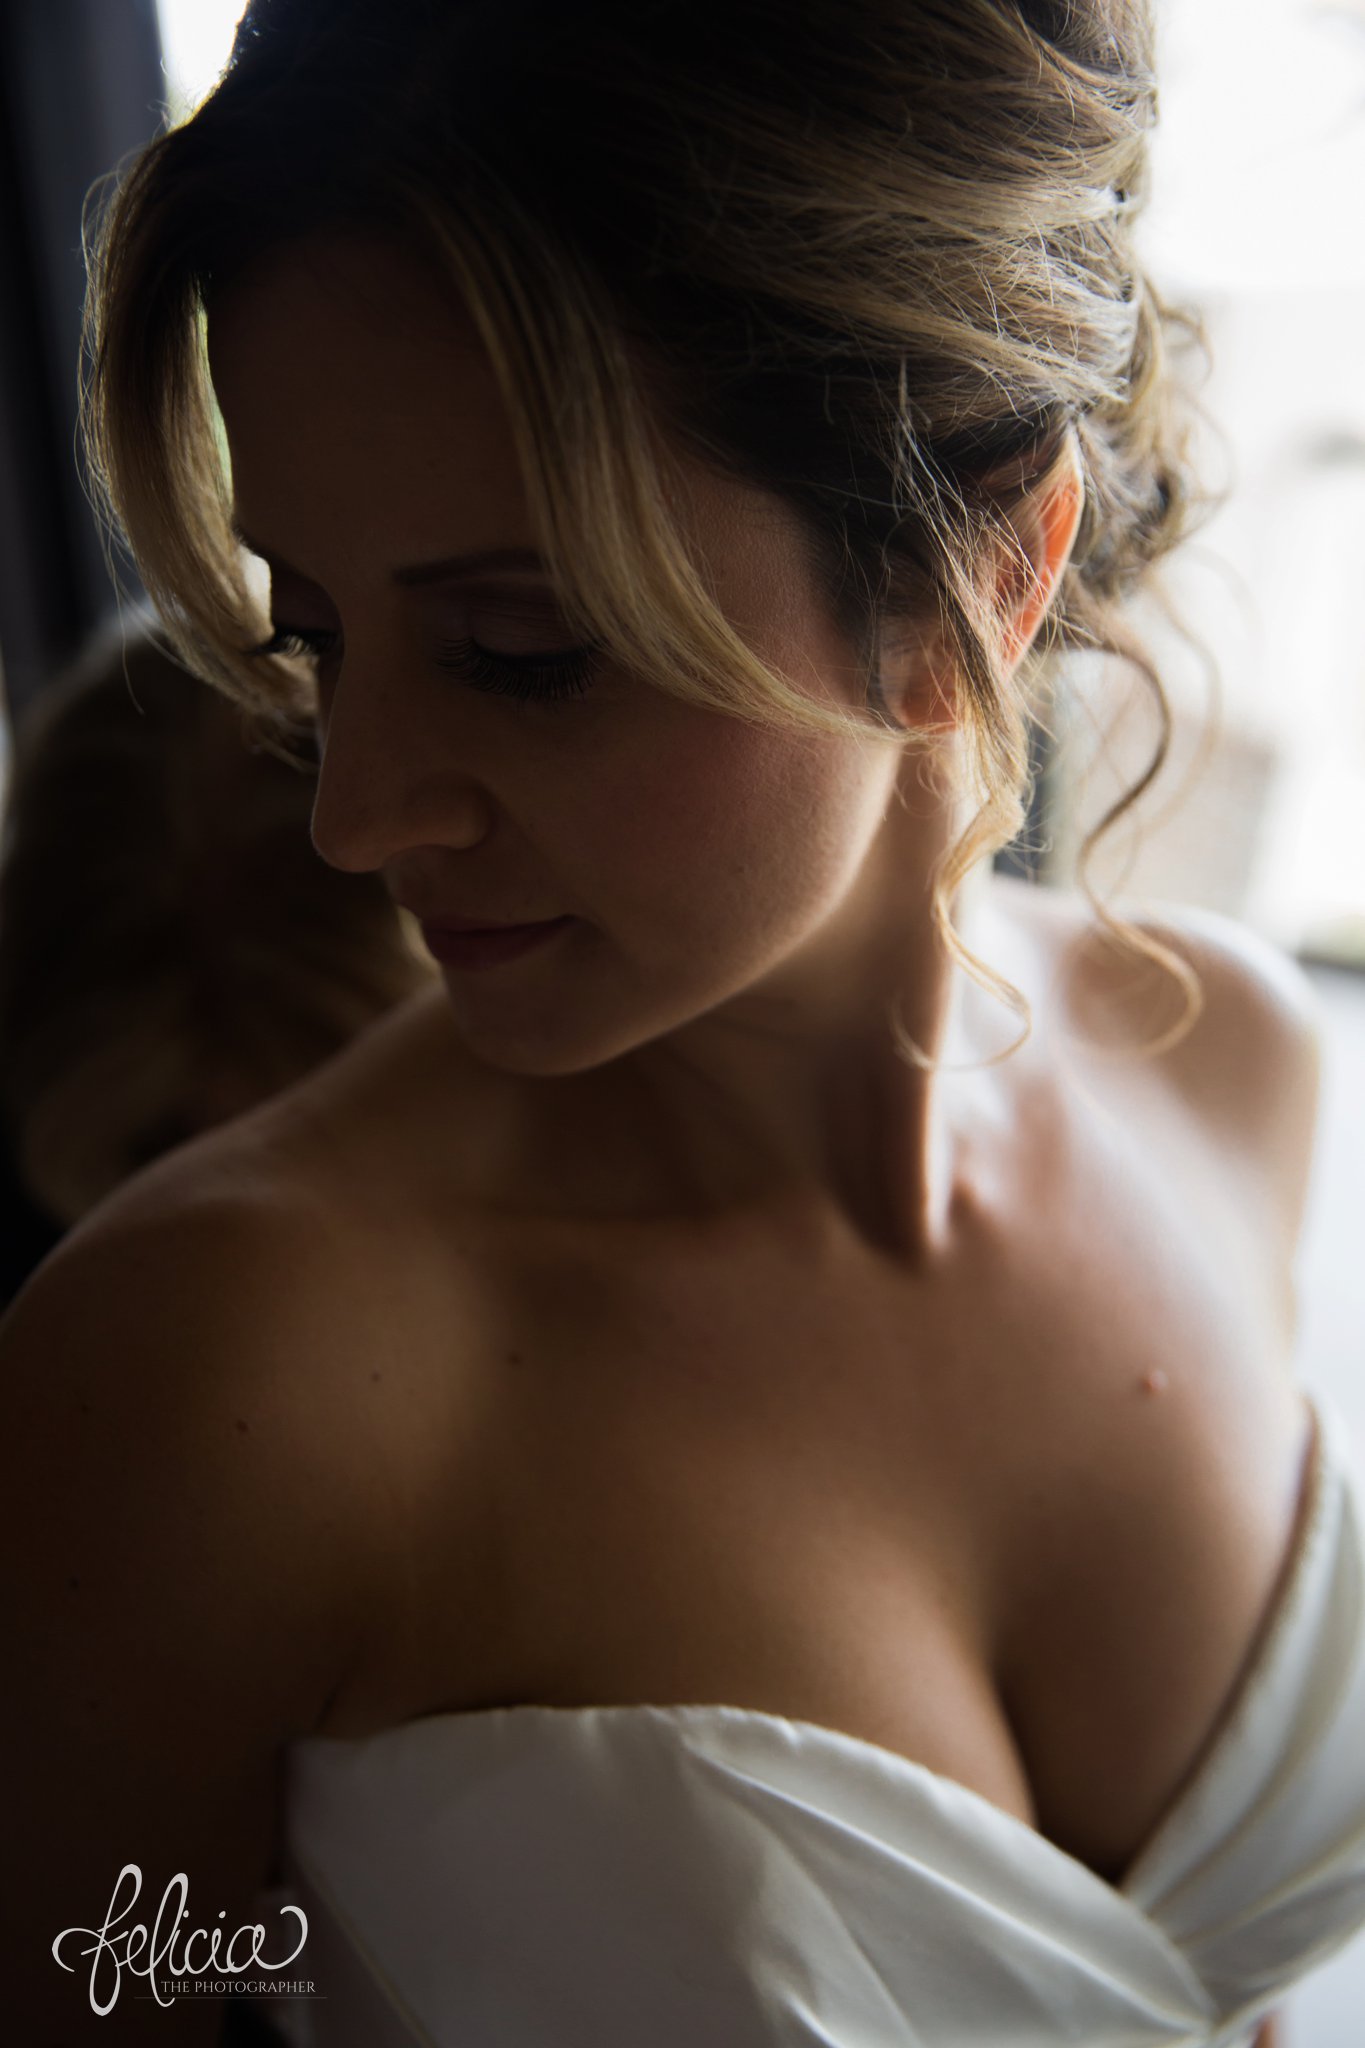 images by feliciathephotographer.com | Destination Beach Wedding | Unicco 20 87 | Photographer | L&S Travel | getting ready | bridal portrait | curly up-do | natural light | strapless dress | elegant 